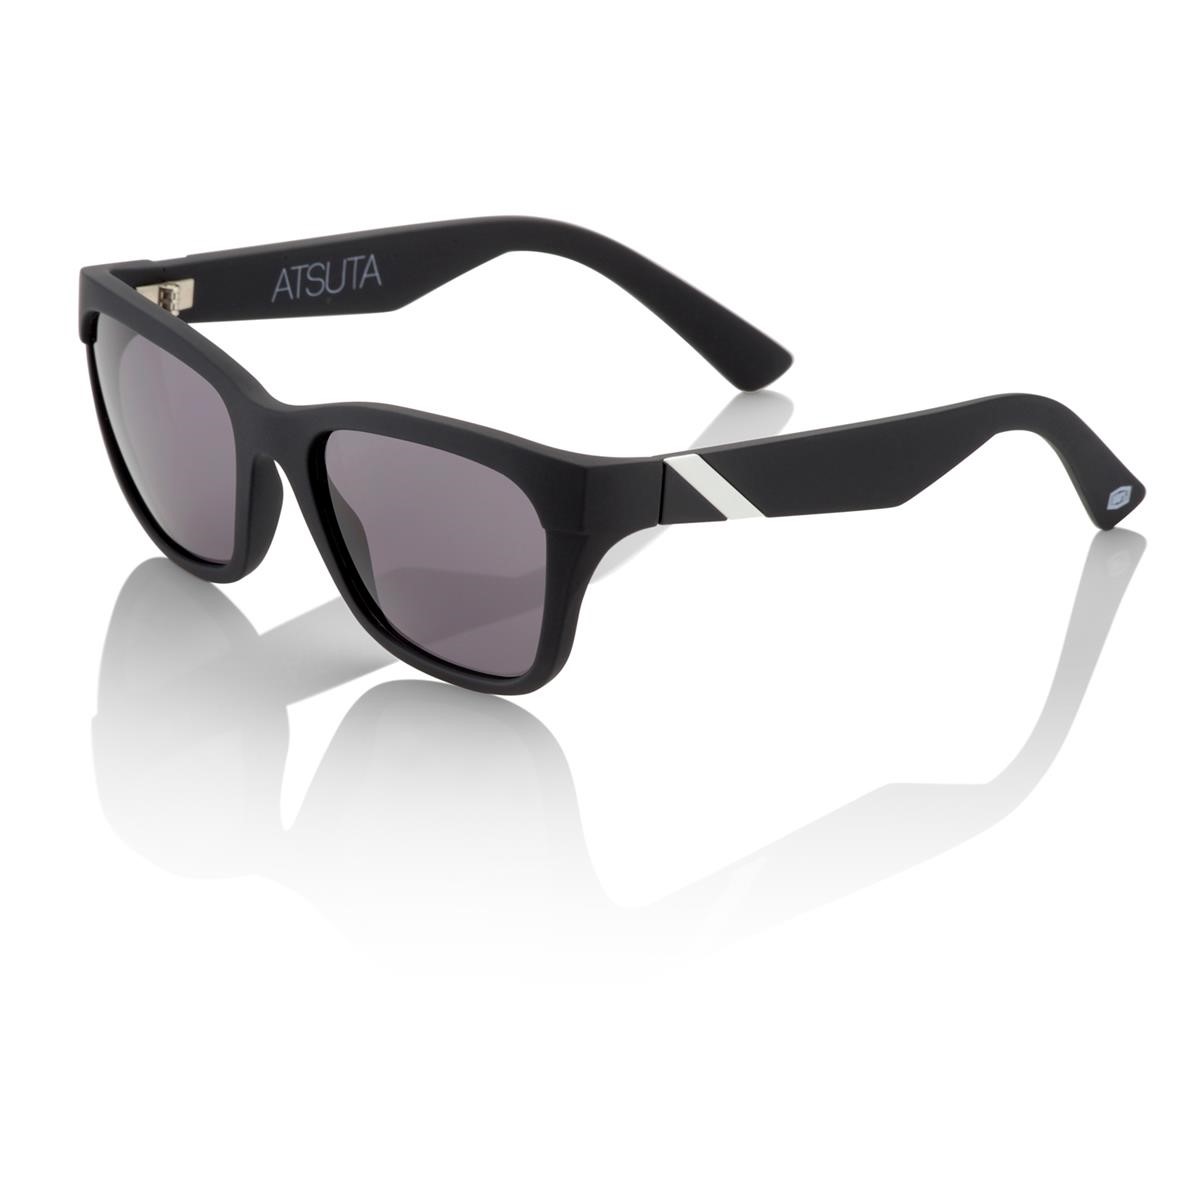 100% Sunglasses The Atsuta Soft Touch/Black